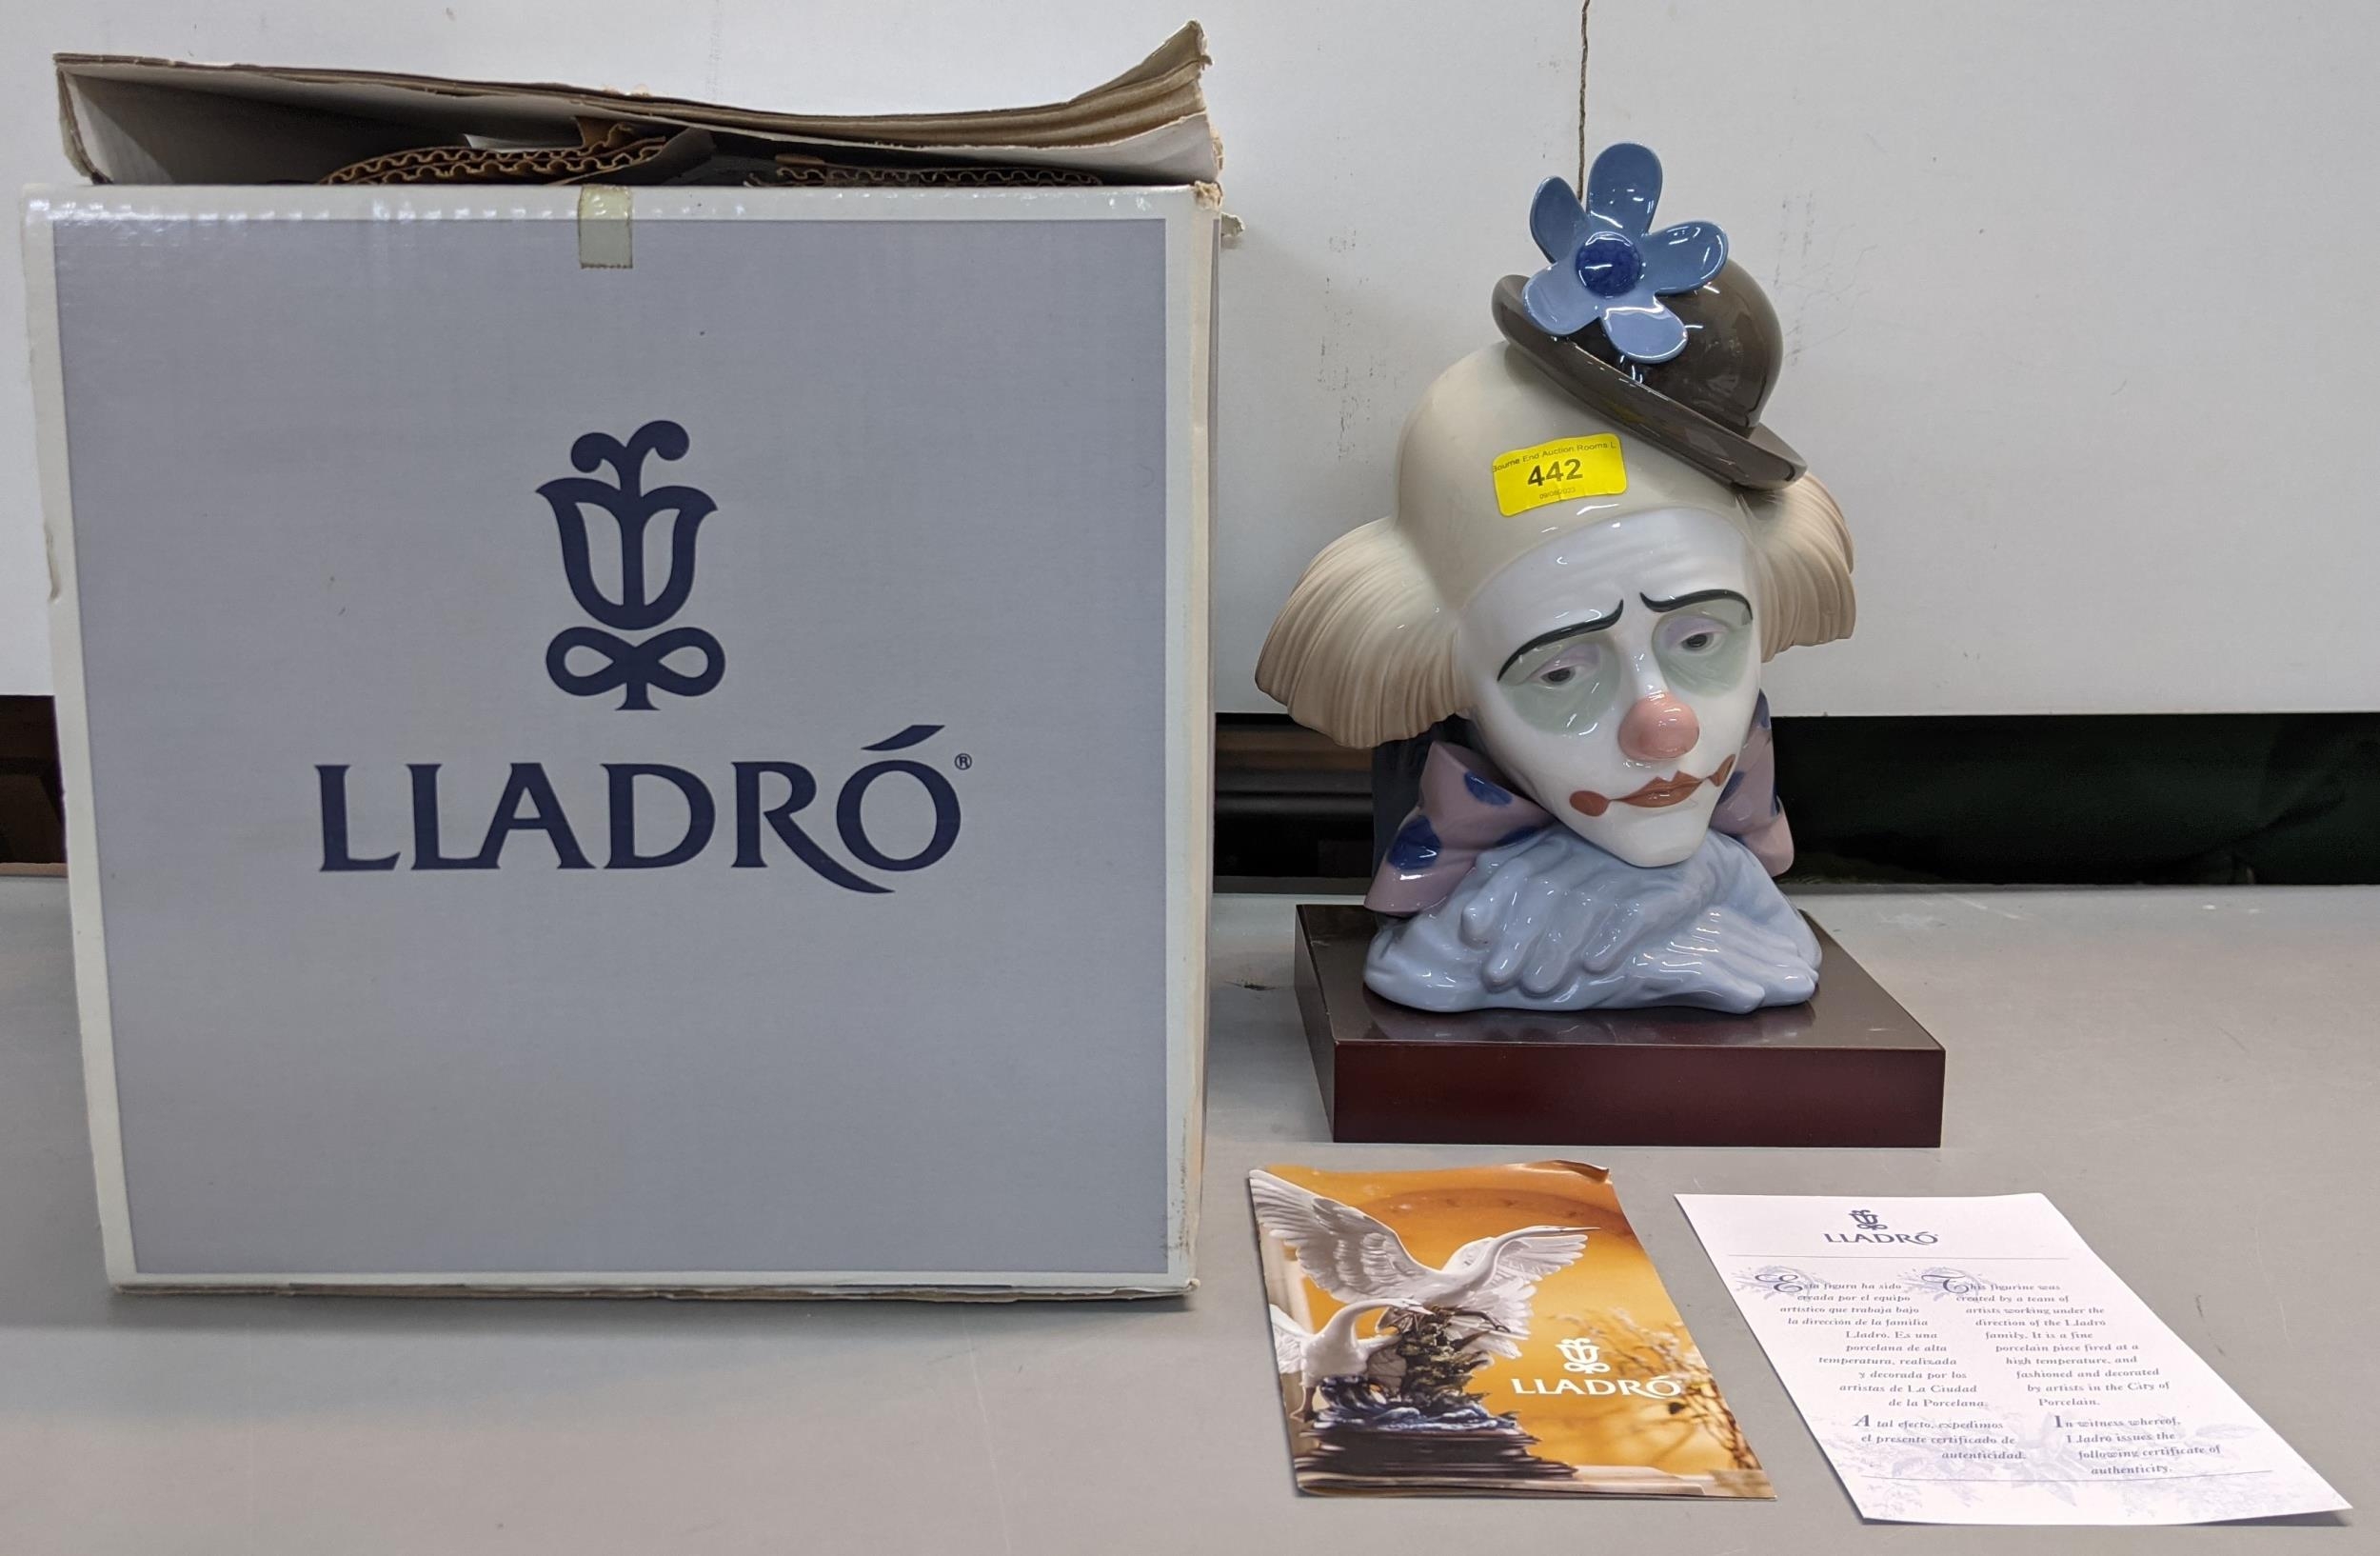 A Lladro sad clown head figurine with original box, number 5130